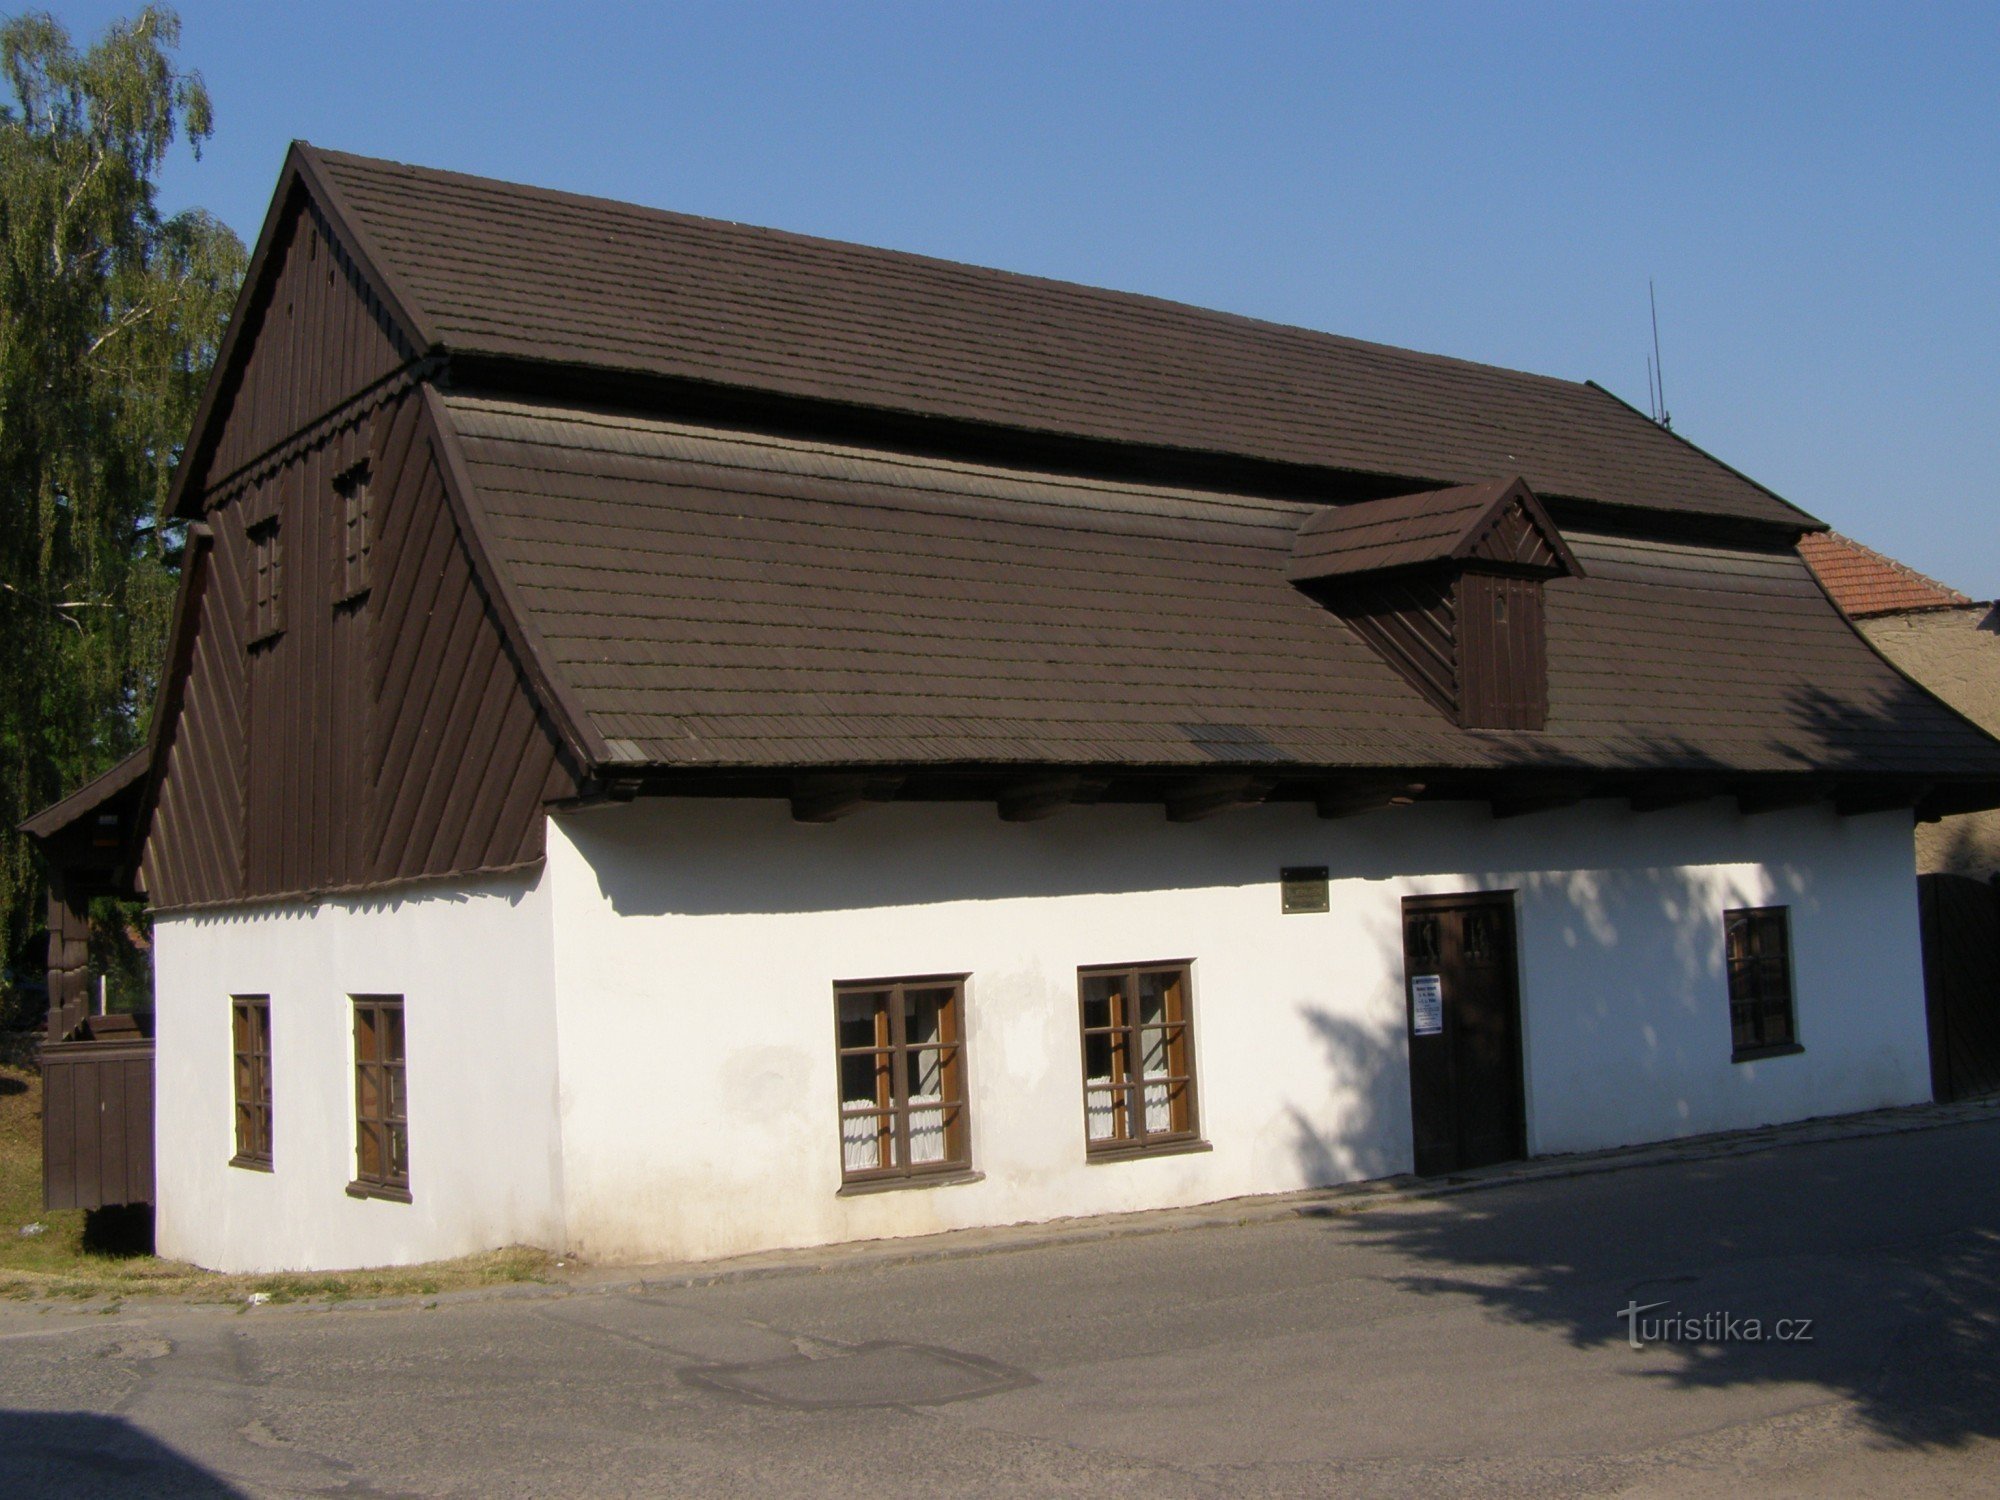 Dobruška - il luogo di nascita di FLVěk (Heka)